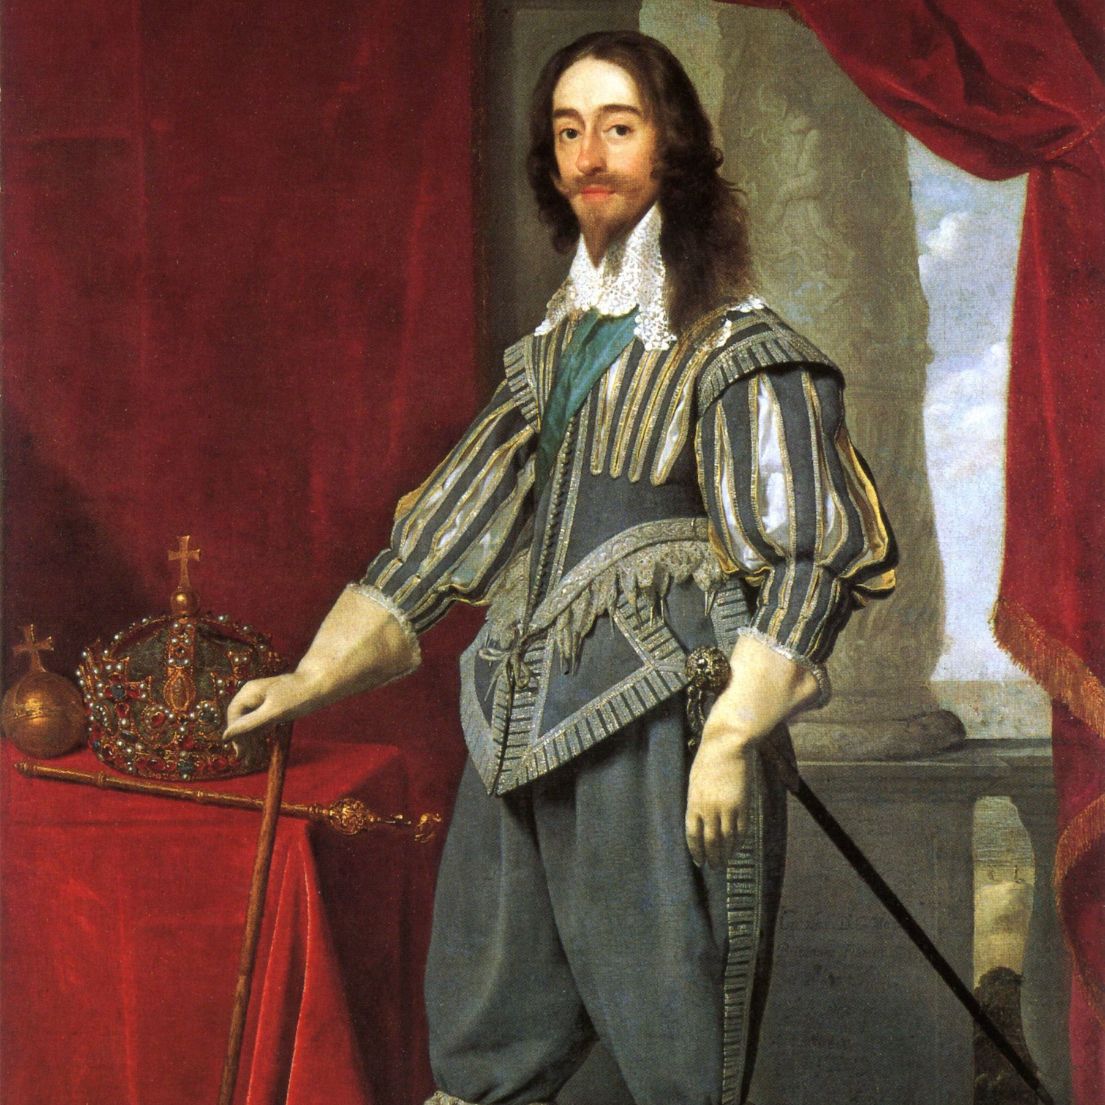 17th century king cosplay